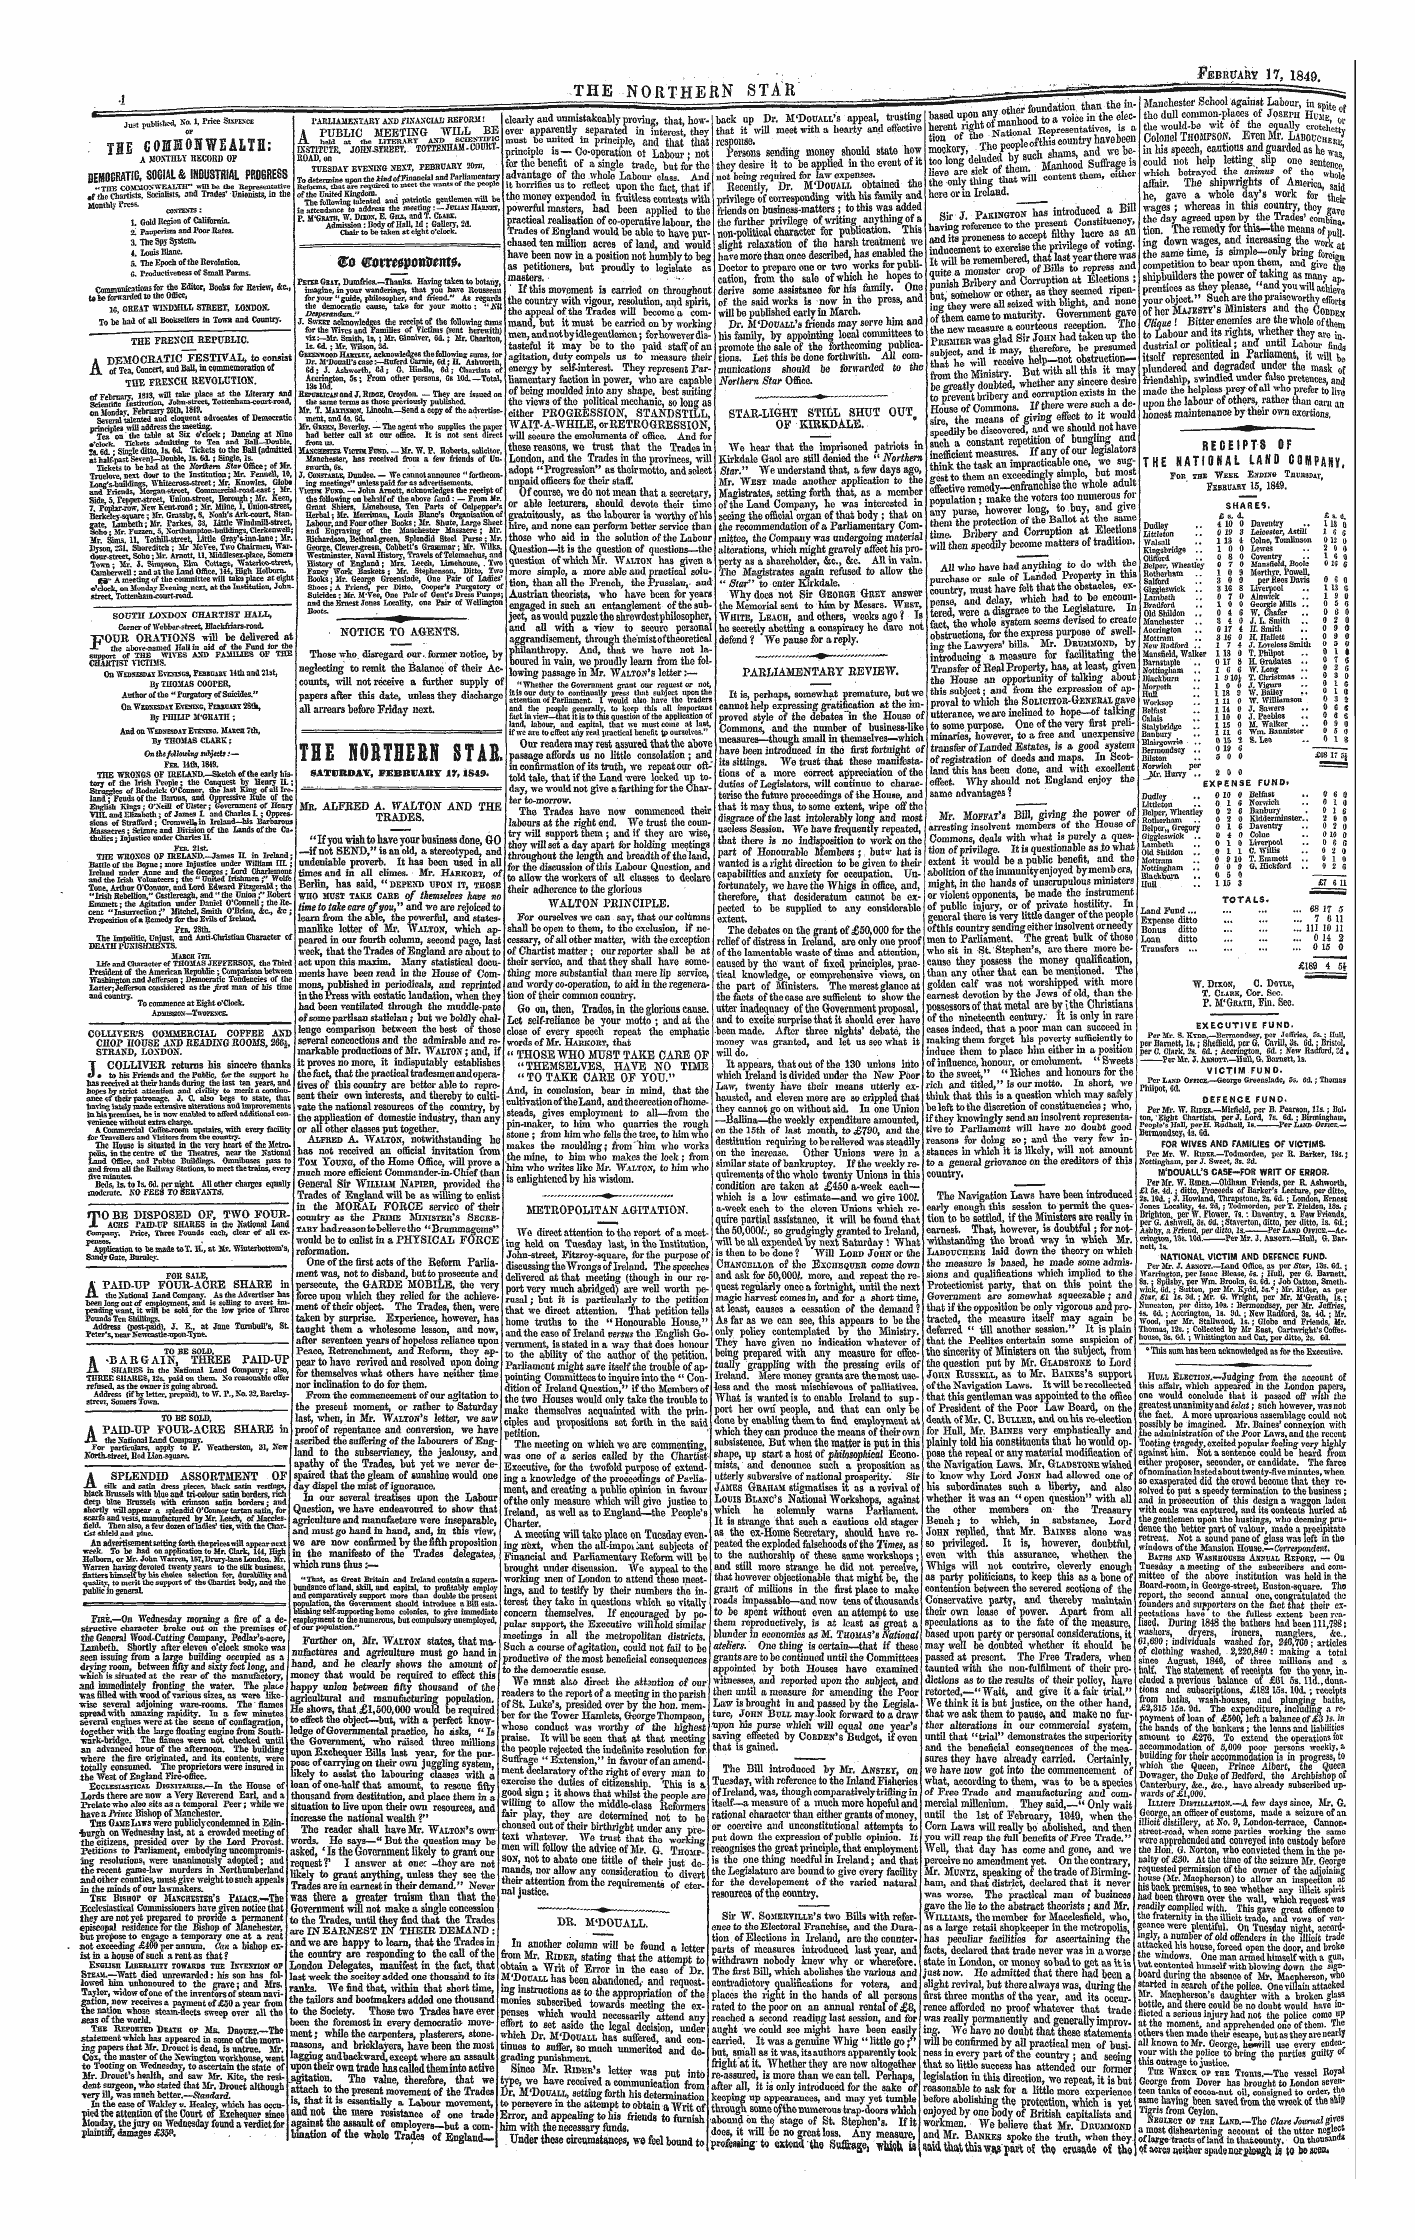 Northern Star (1837-1852): jS F Y, 1st edition - £0 (Fzotmpotfixmt.